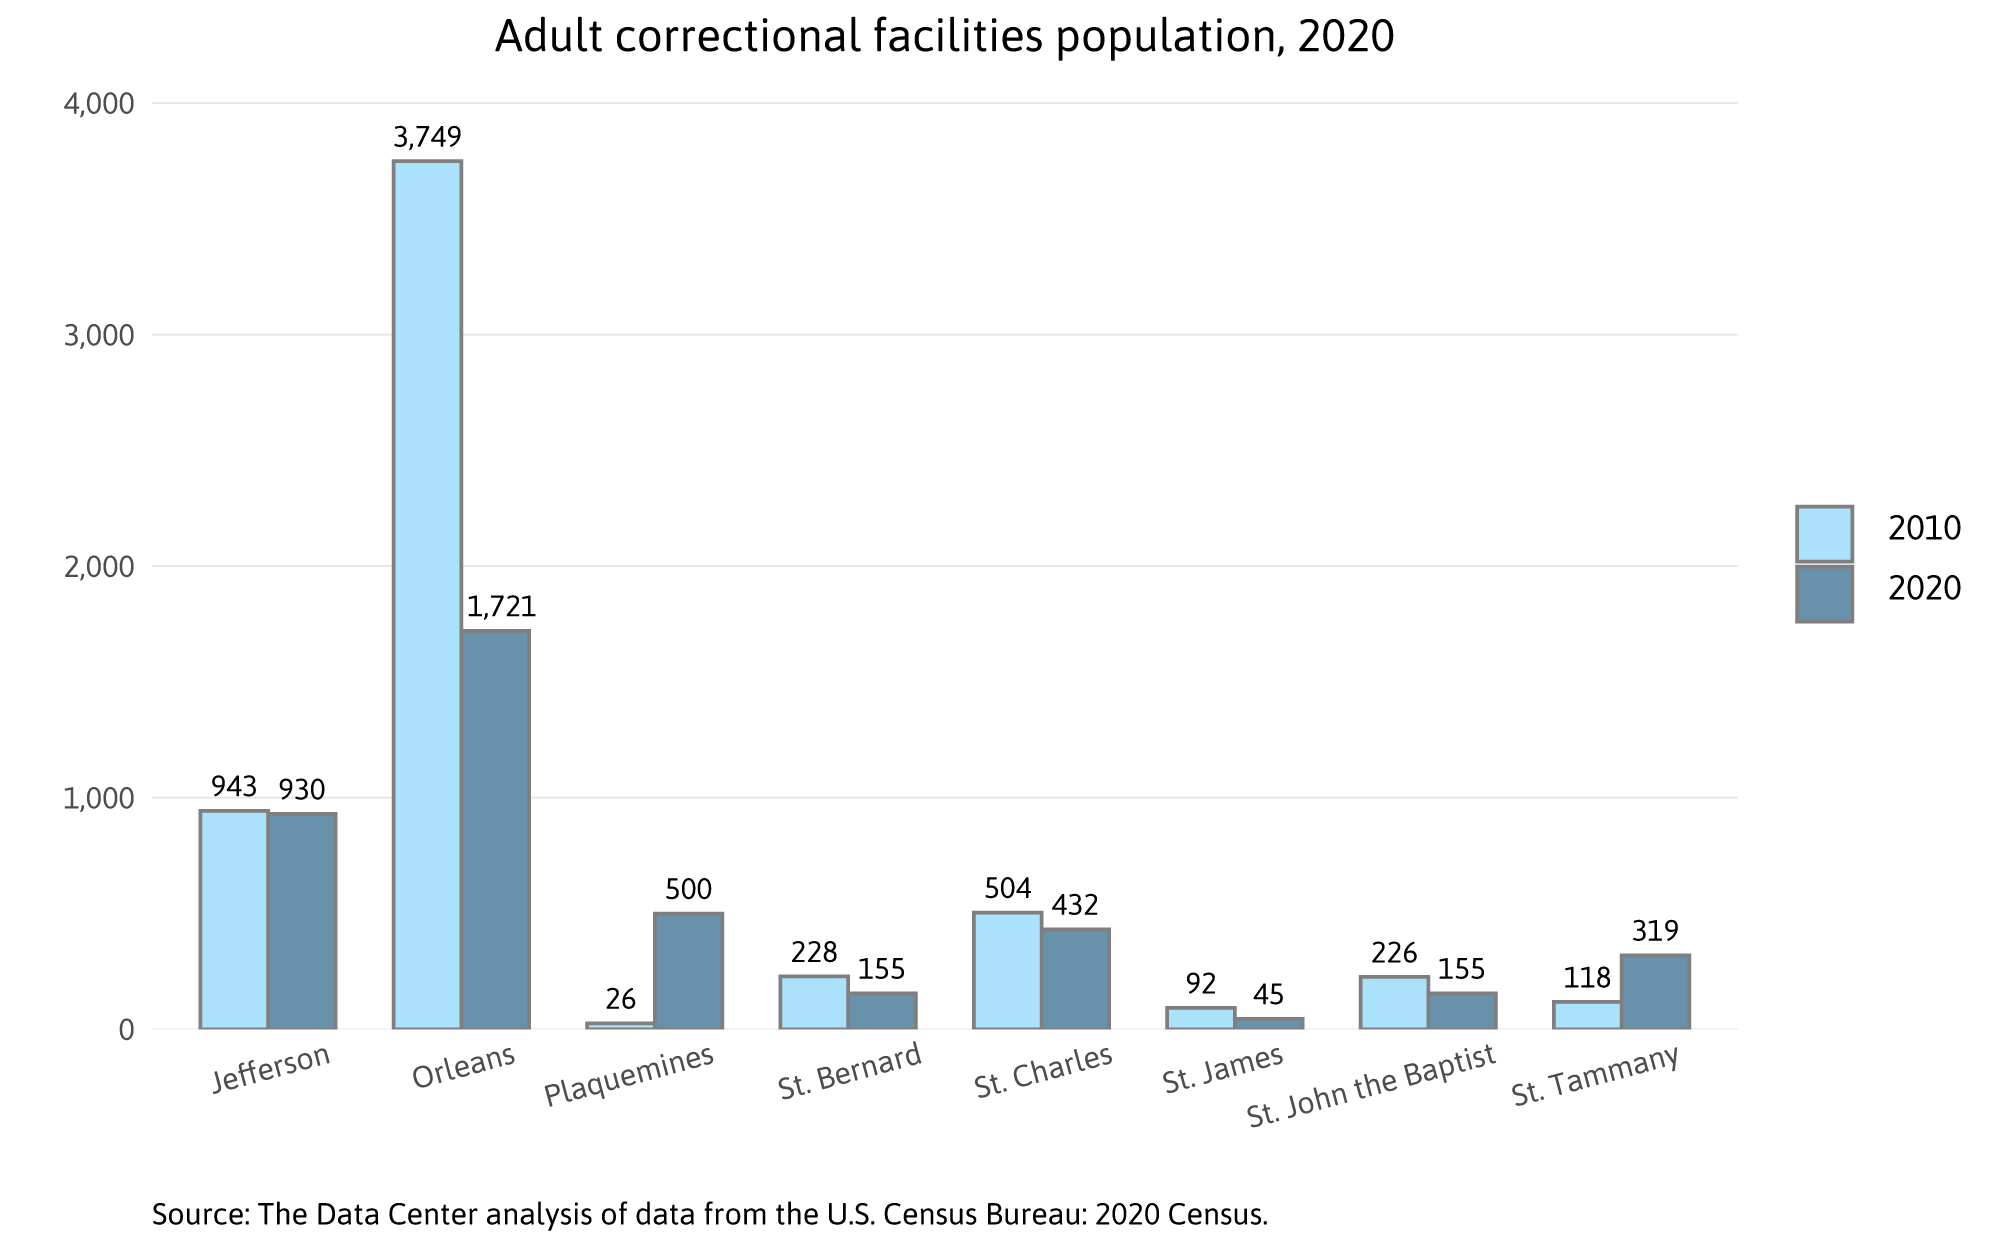 Adult correctional facilities